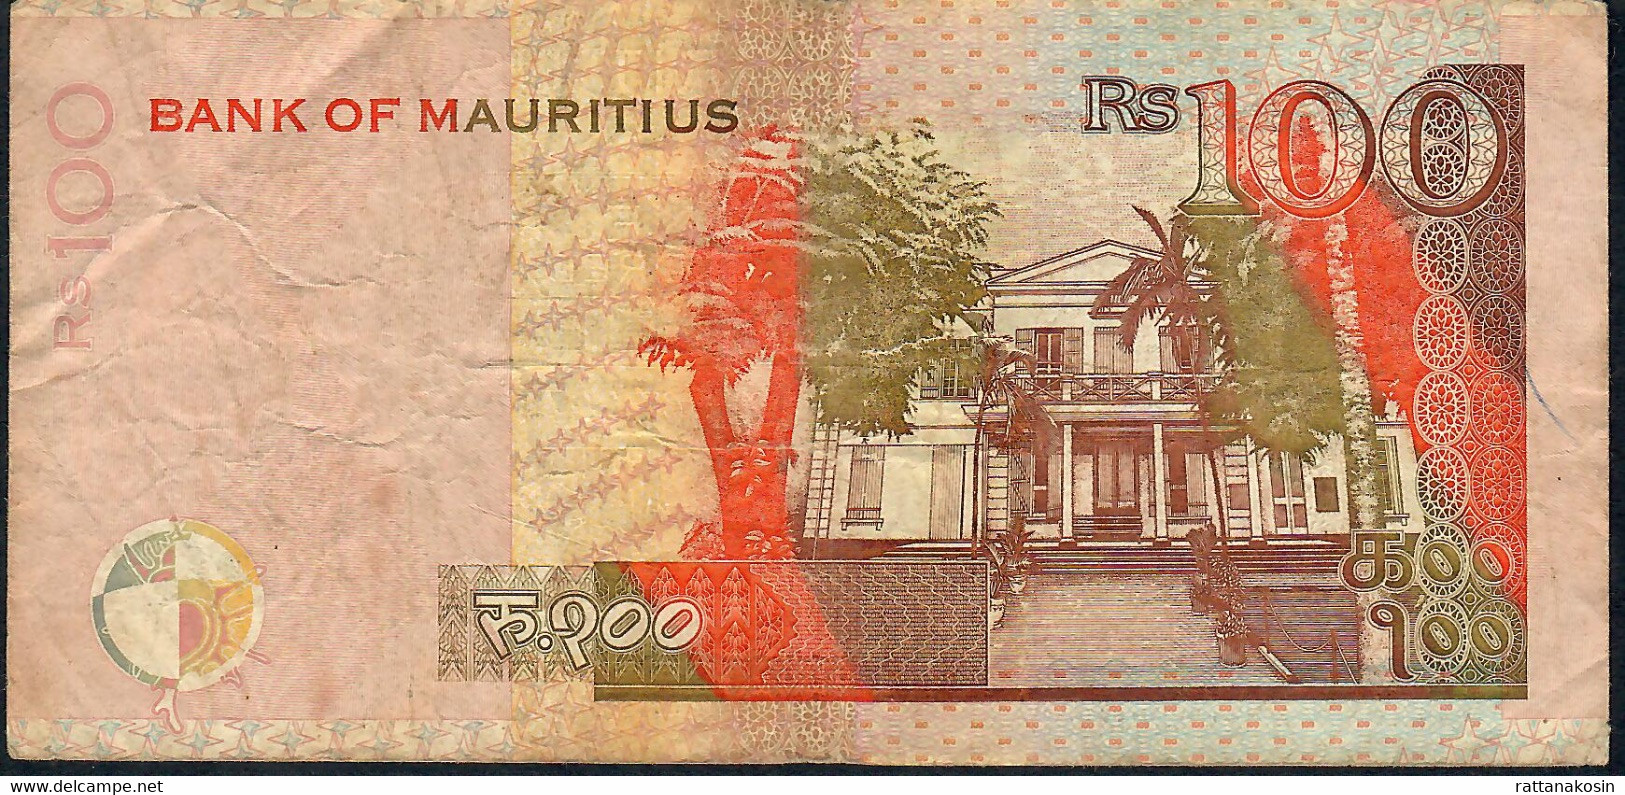 MAURITIUS P51b 100 RUPEES 2001 #BB FINE - Mauritius